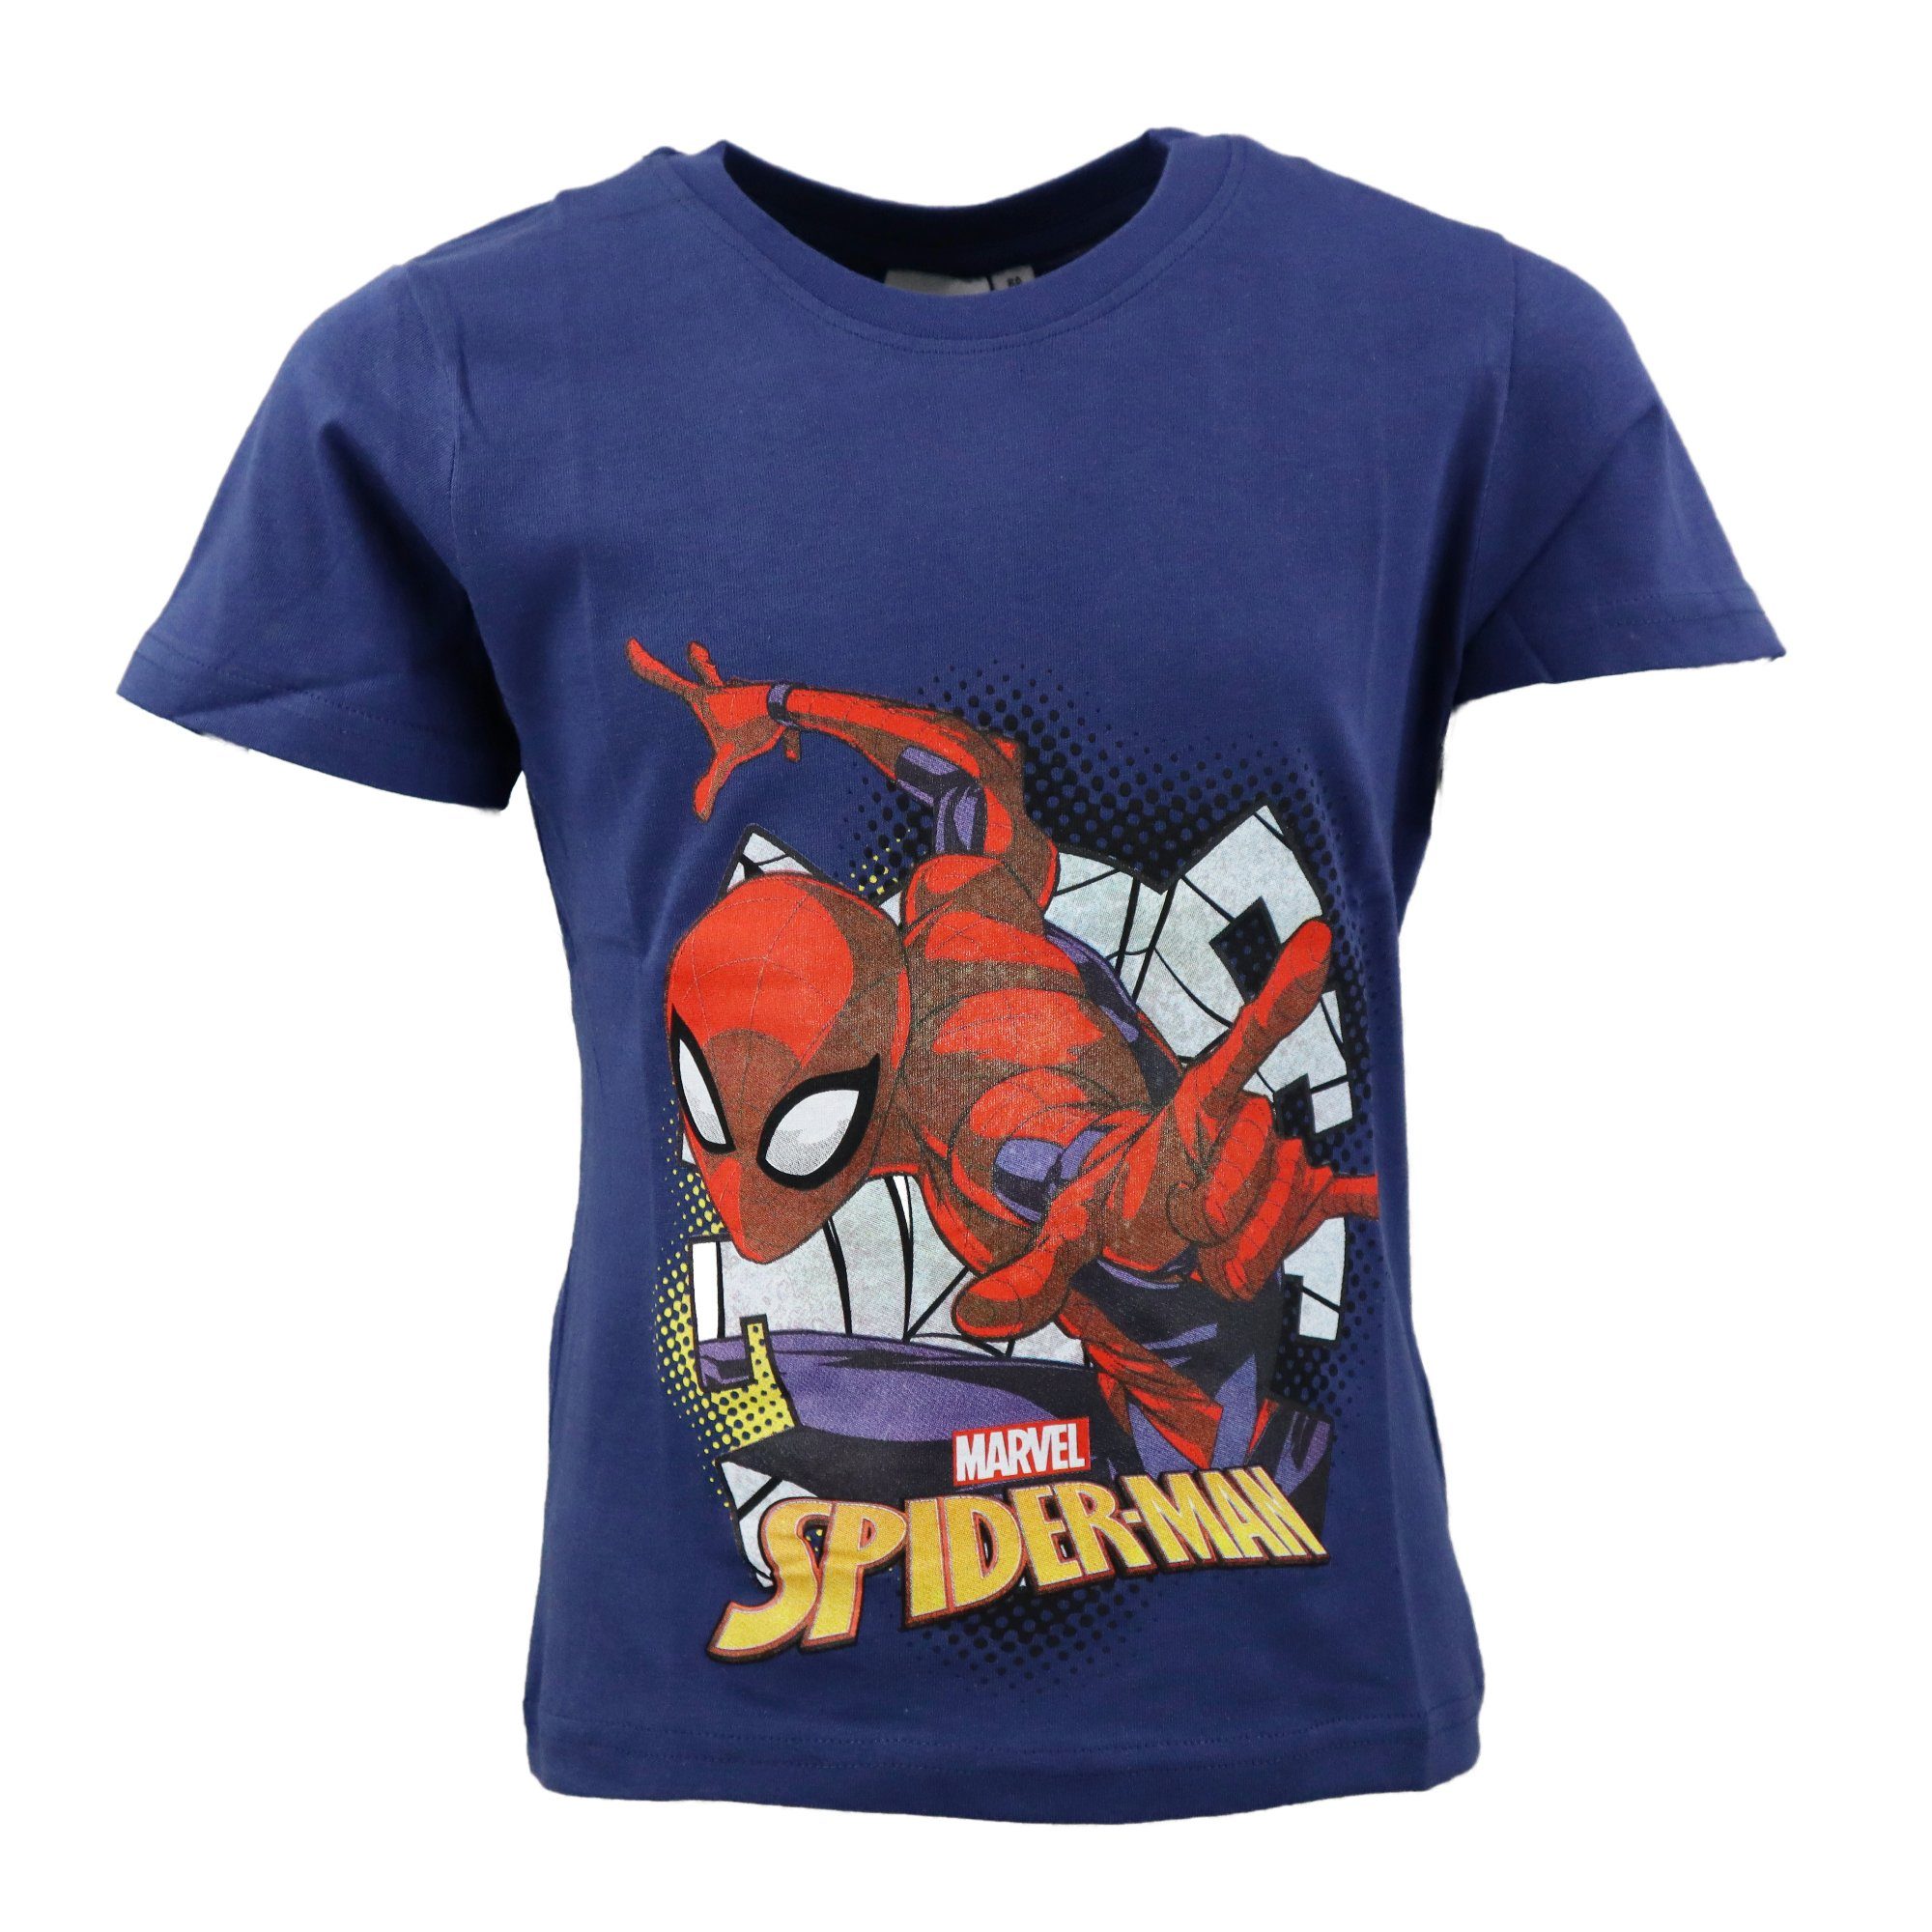 MARVEL Print-Shirt Spiderman T-Shirt kurzarm Kinder Jungen Shirt Gr. 98 bis 128, 100% Baumwolle Dunkelblau